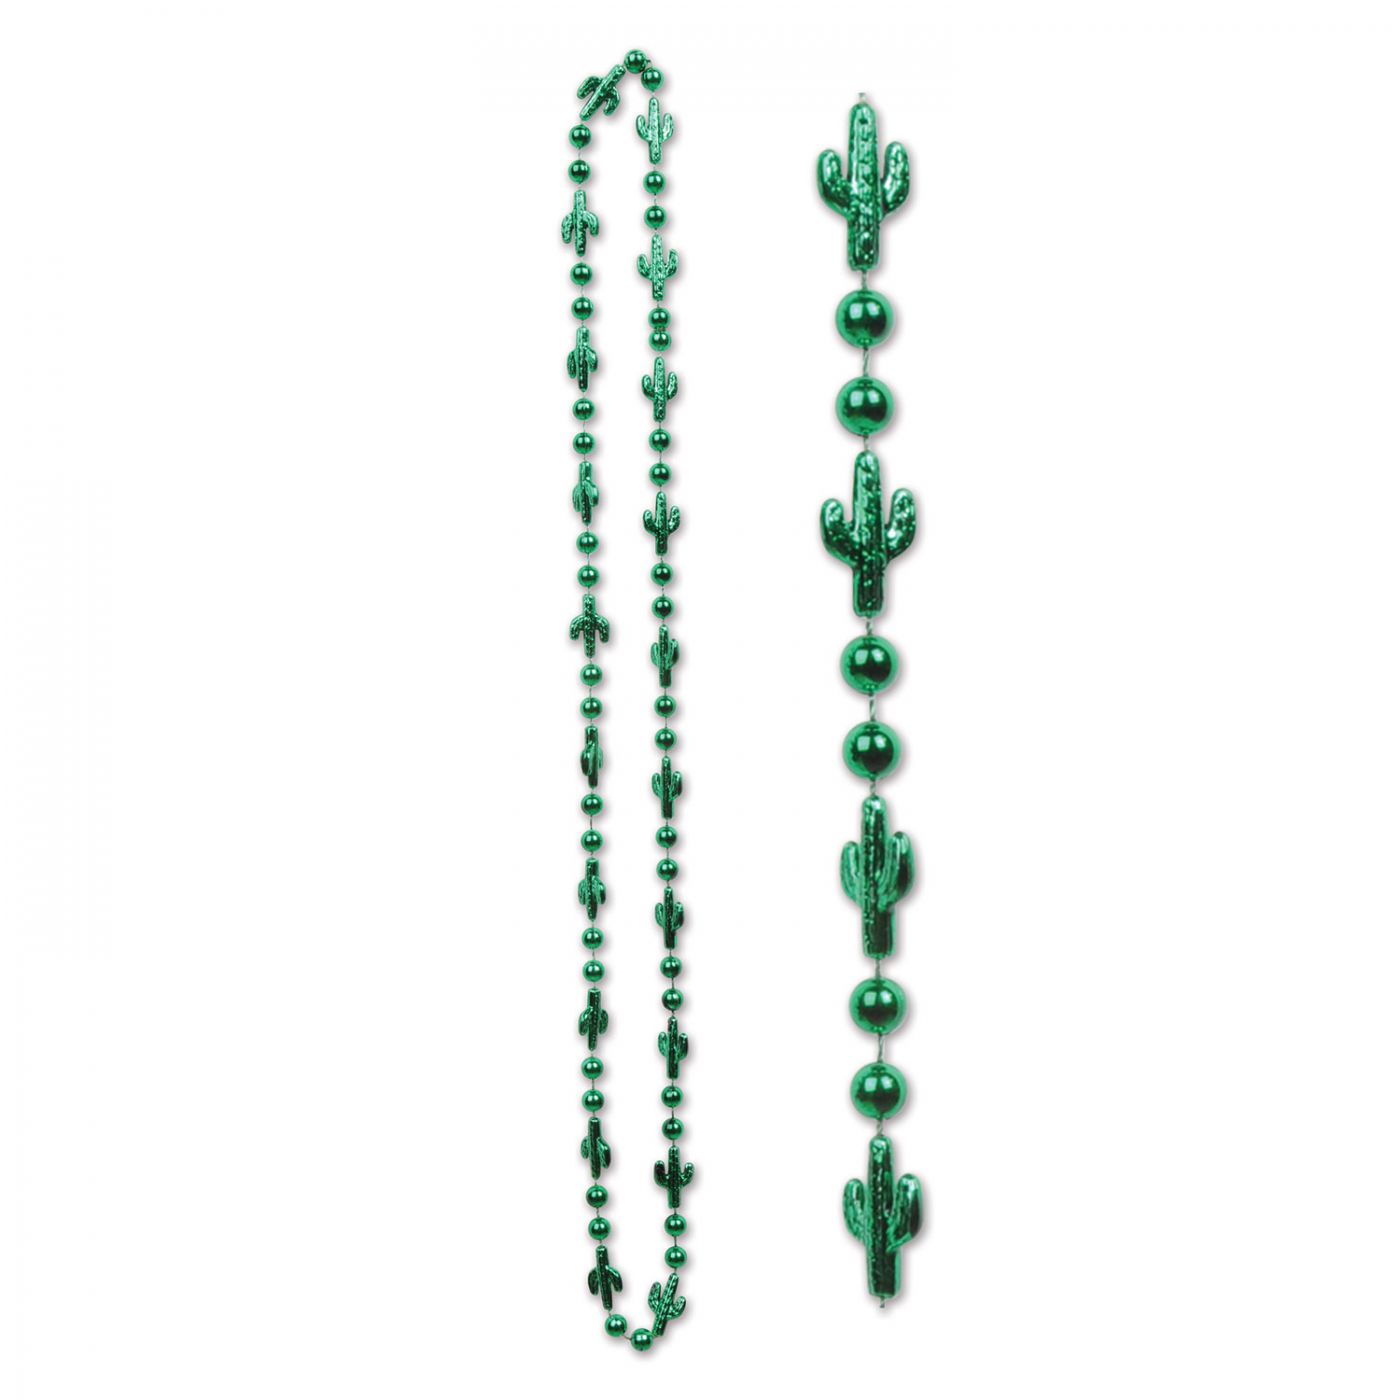 Cactus Beads image